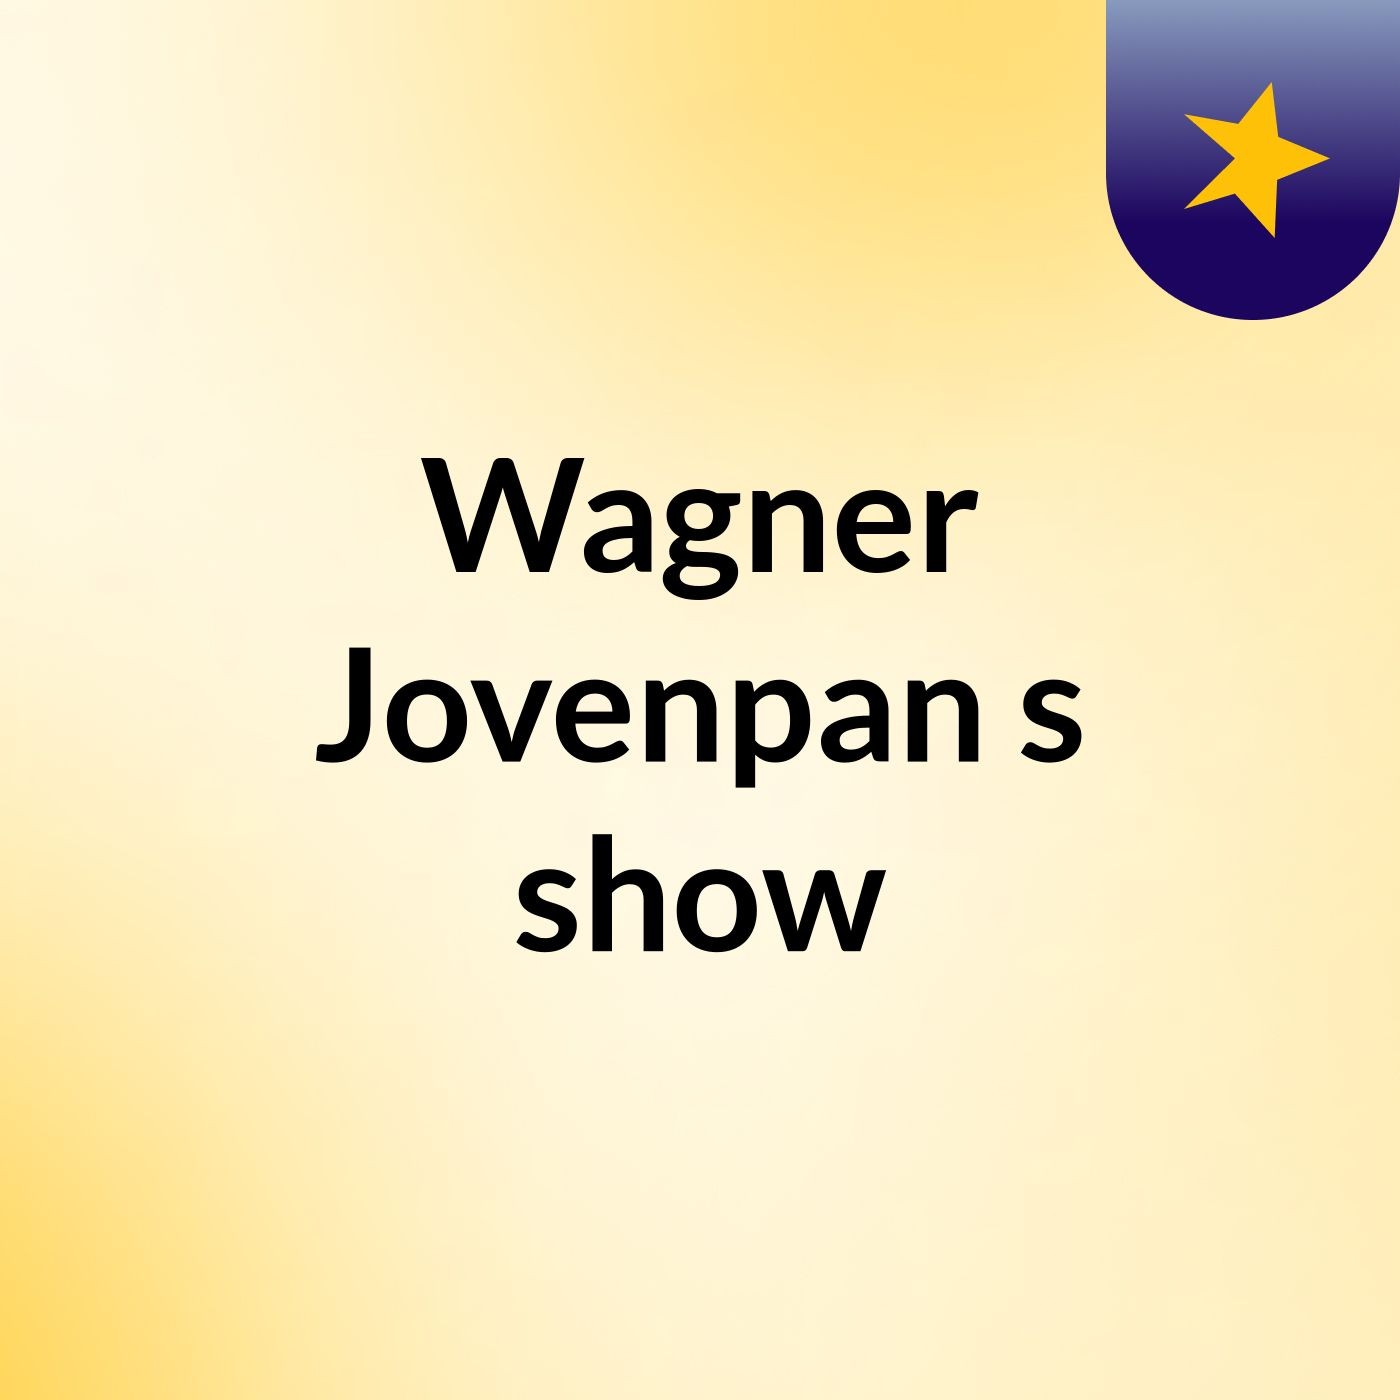 Wagner Jovenpan's show